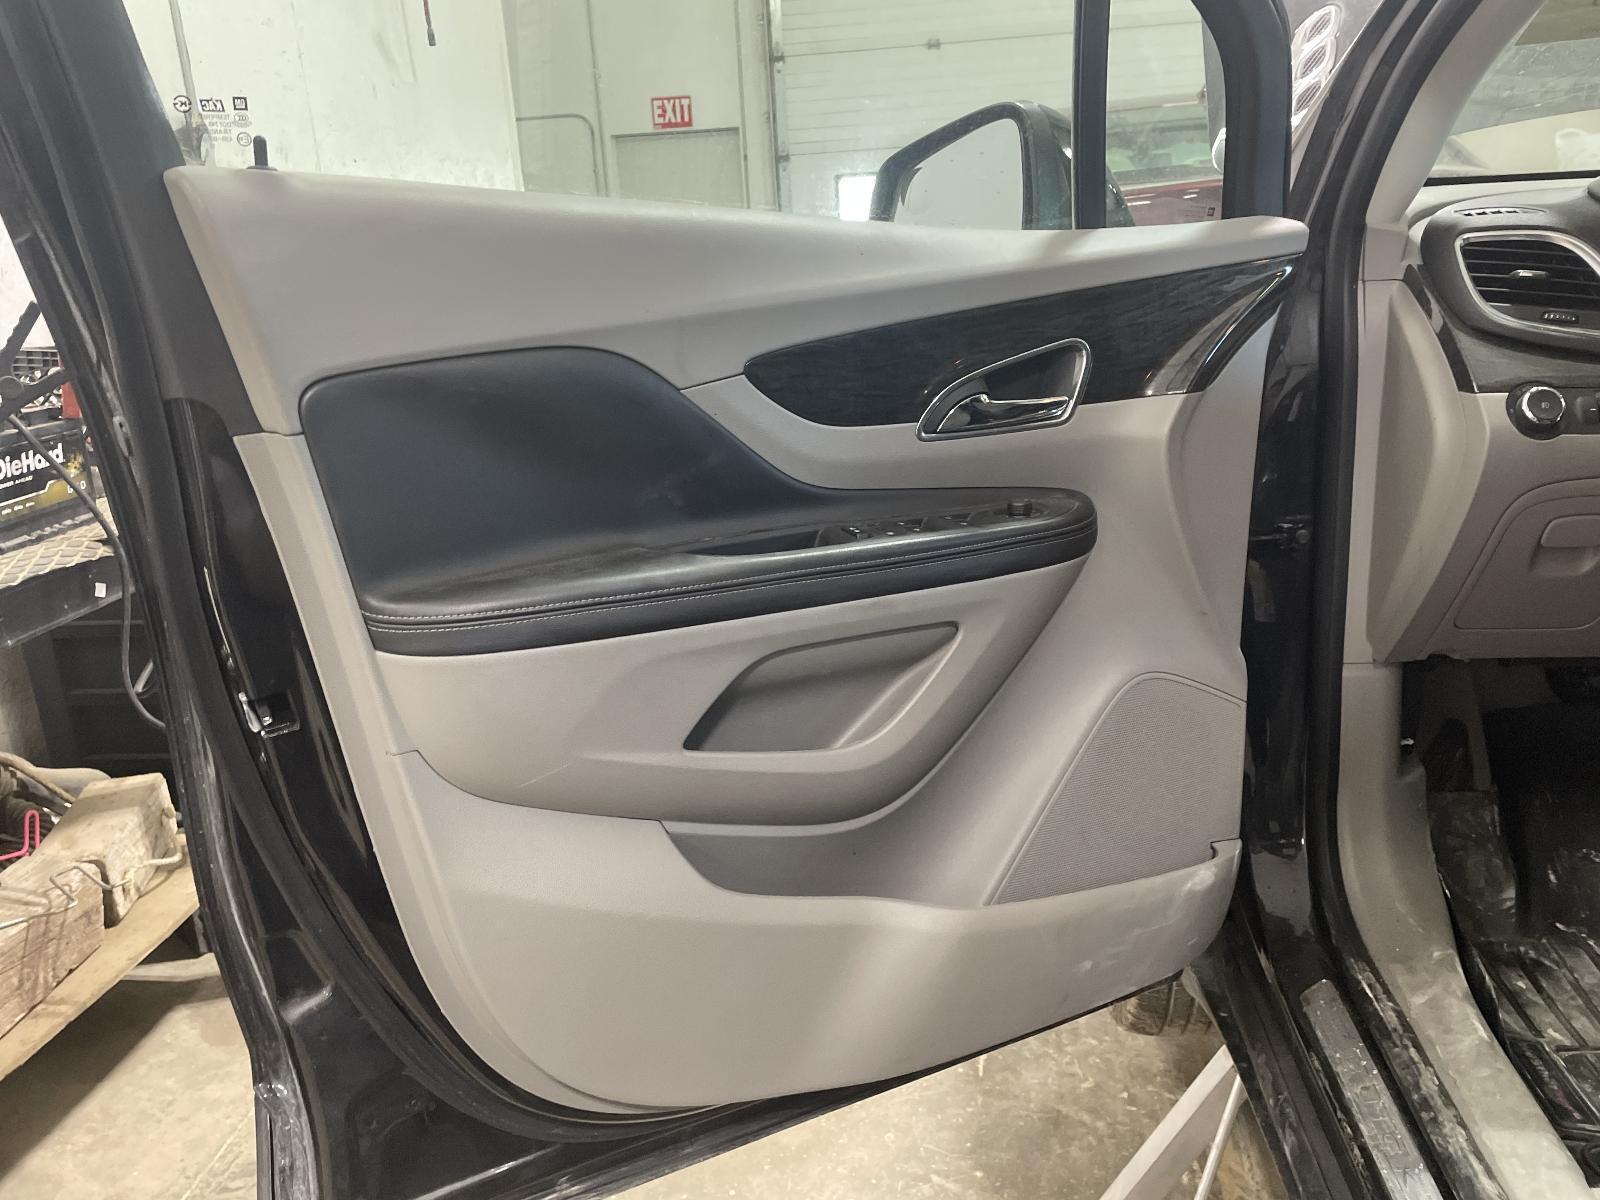 Used Front Left Door Interior Trim Panel fits: 2013 Buick Encore Trim Panel Fr D